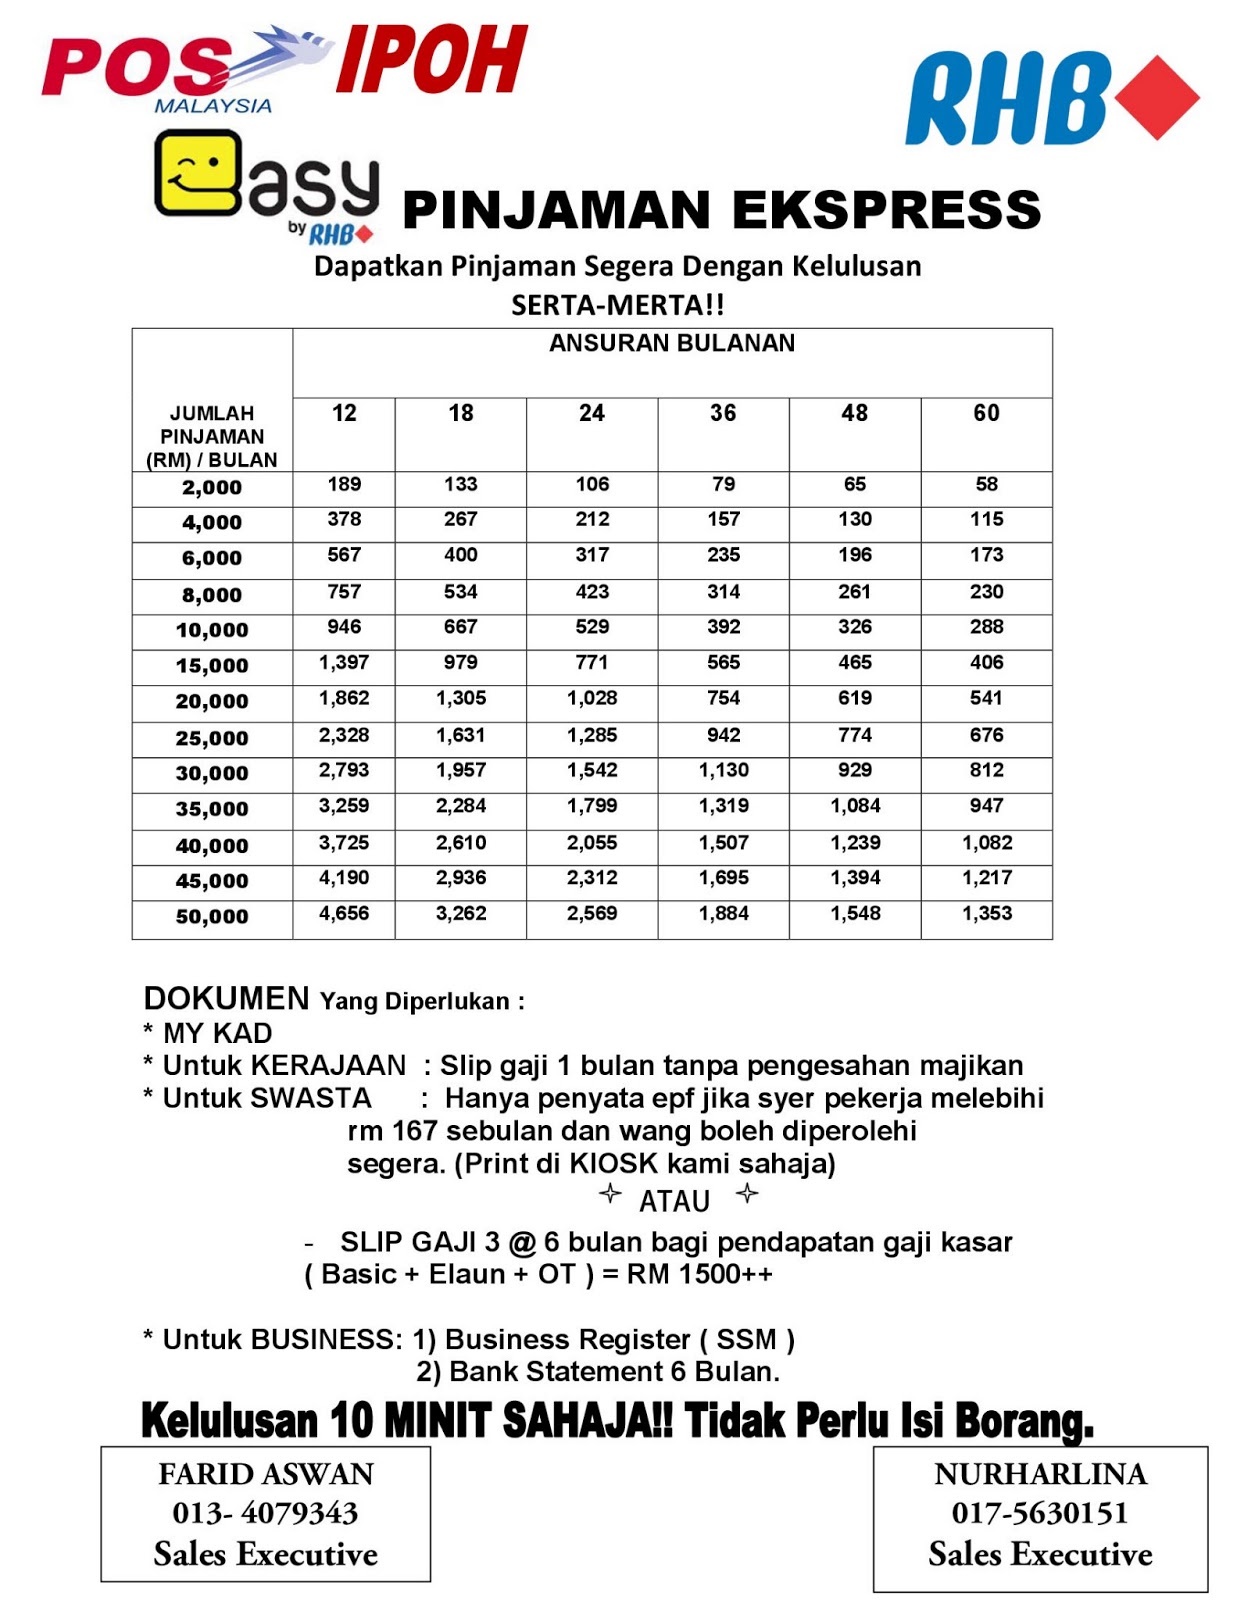 Loan Express RHB: Pinjaman Ekspres EASY RHB IPOH